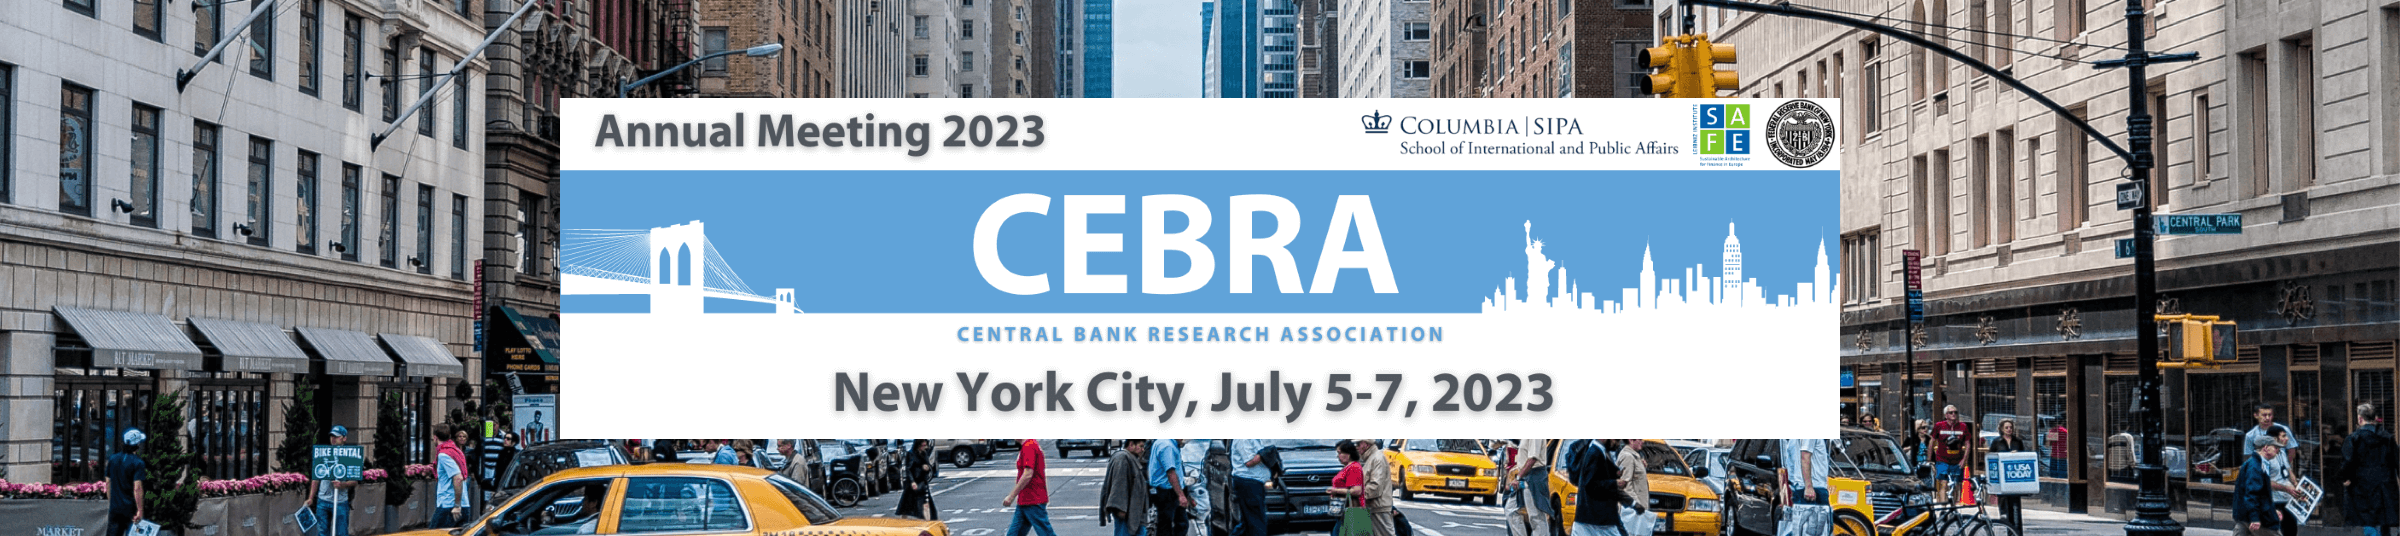 CEBRA Annual Meeting, New York City, July 5-7, 2023